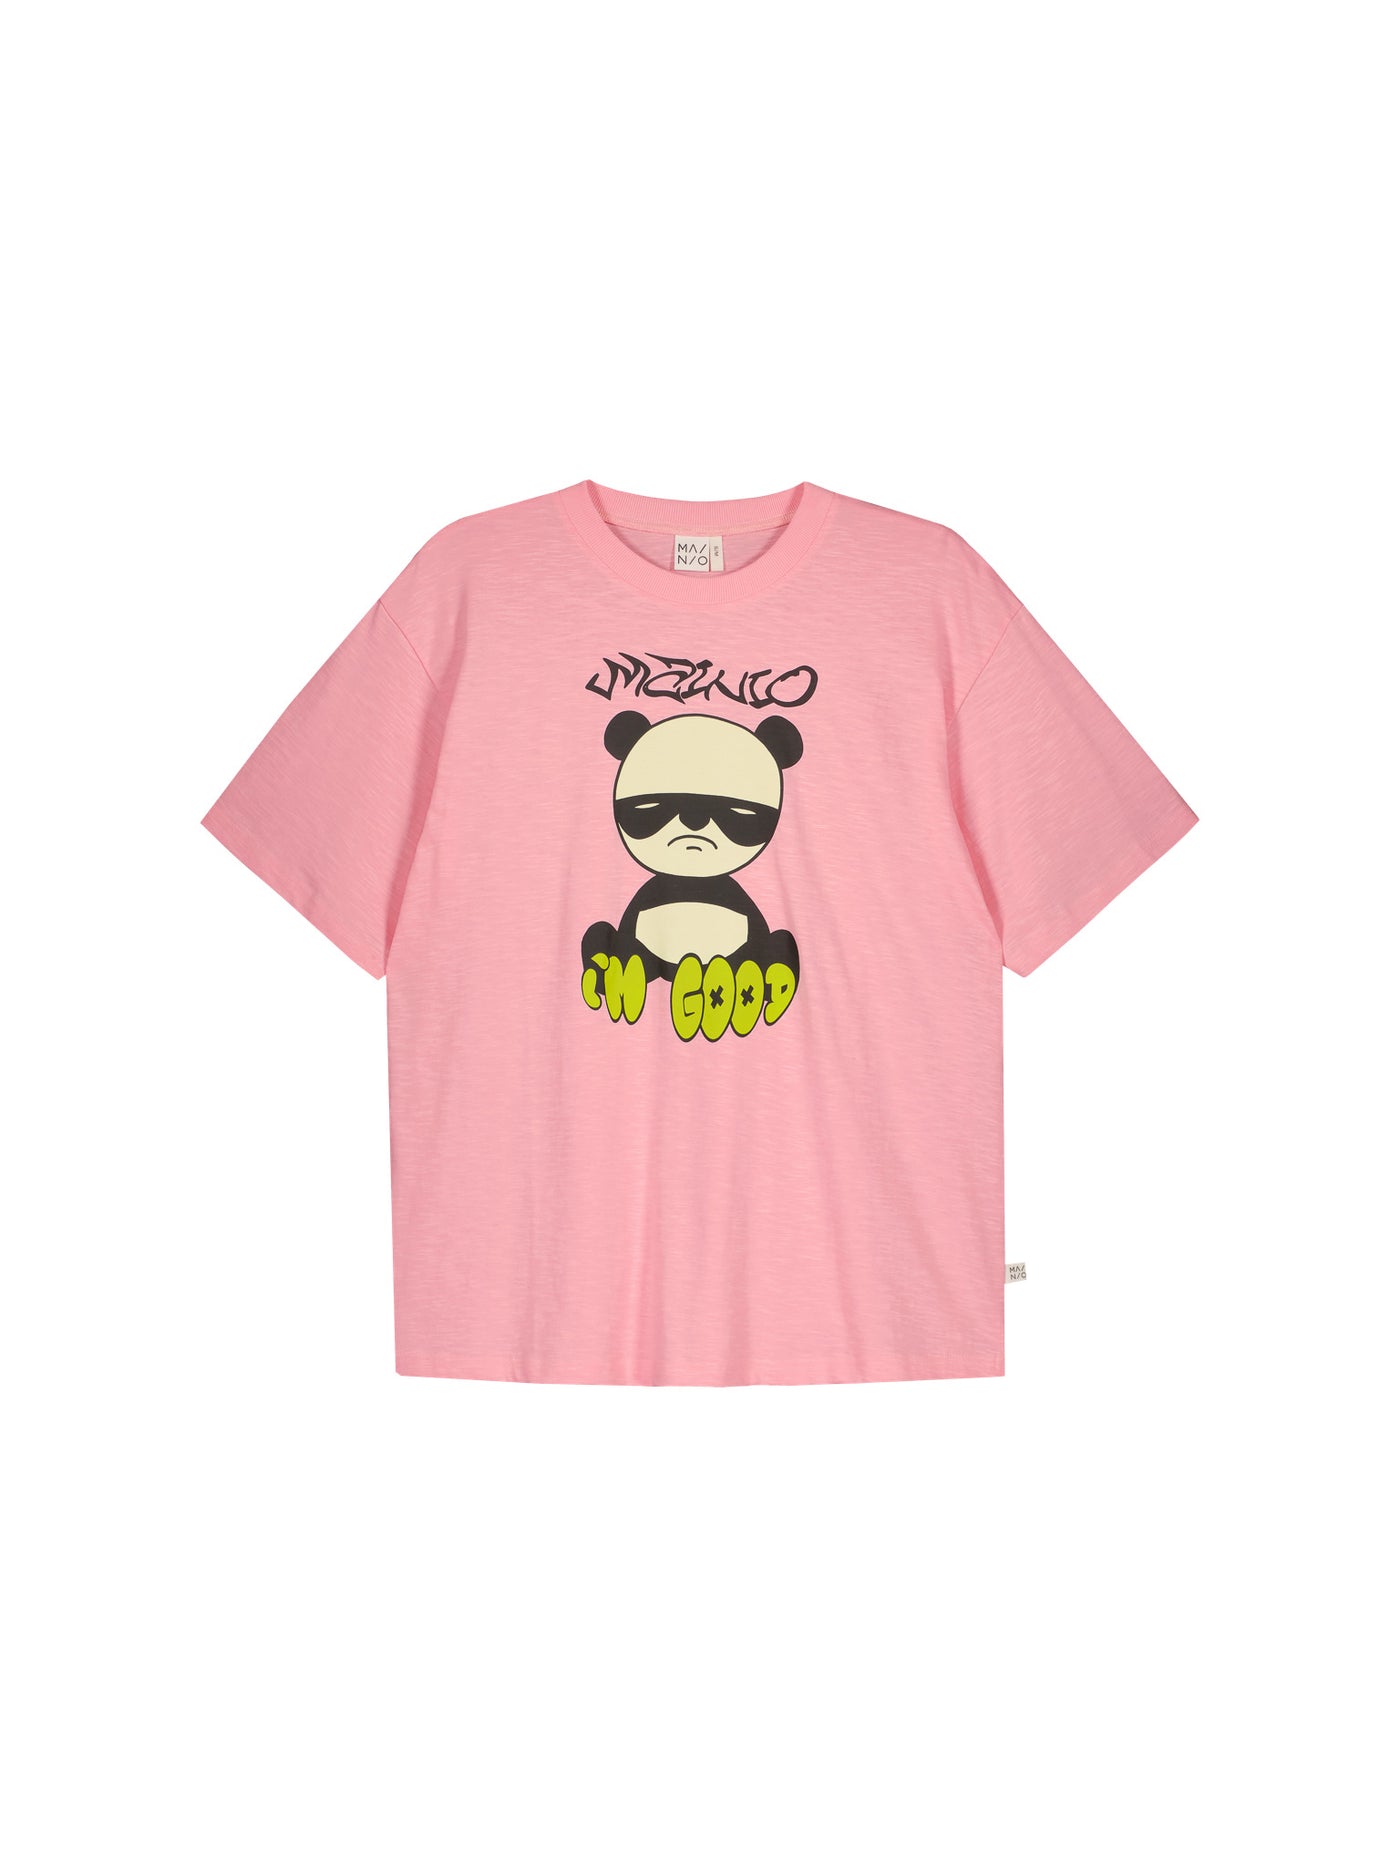 I'm Good T-Shirt, Candy Pink